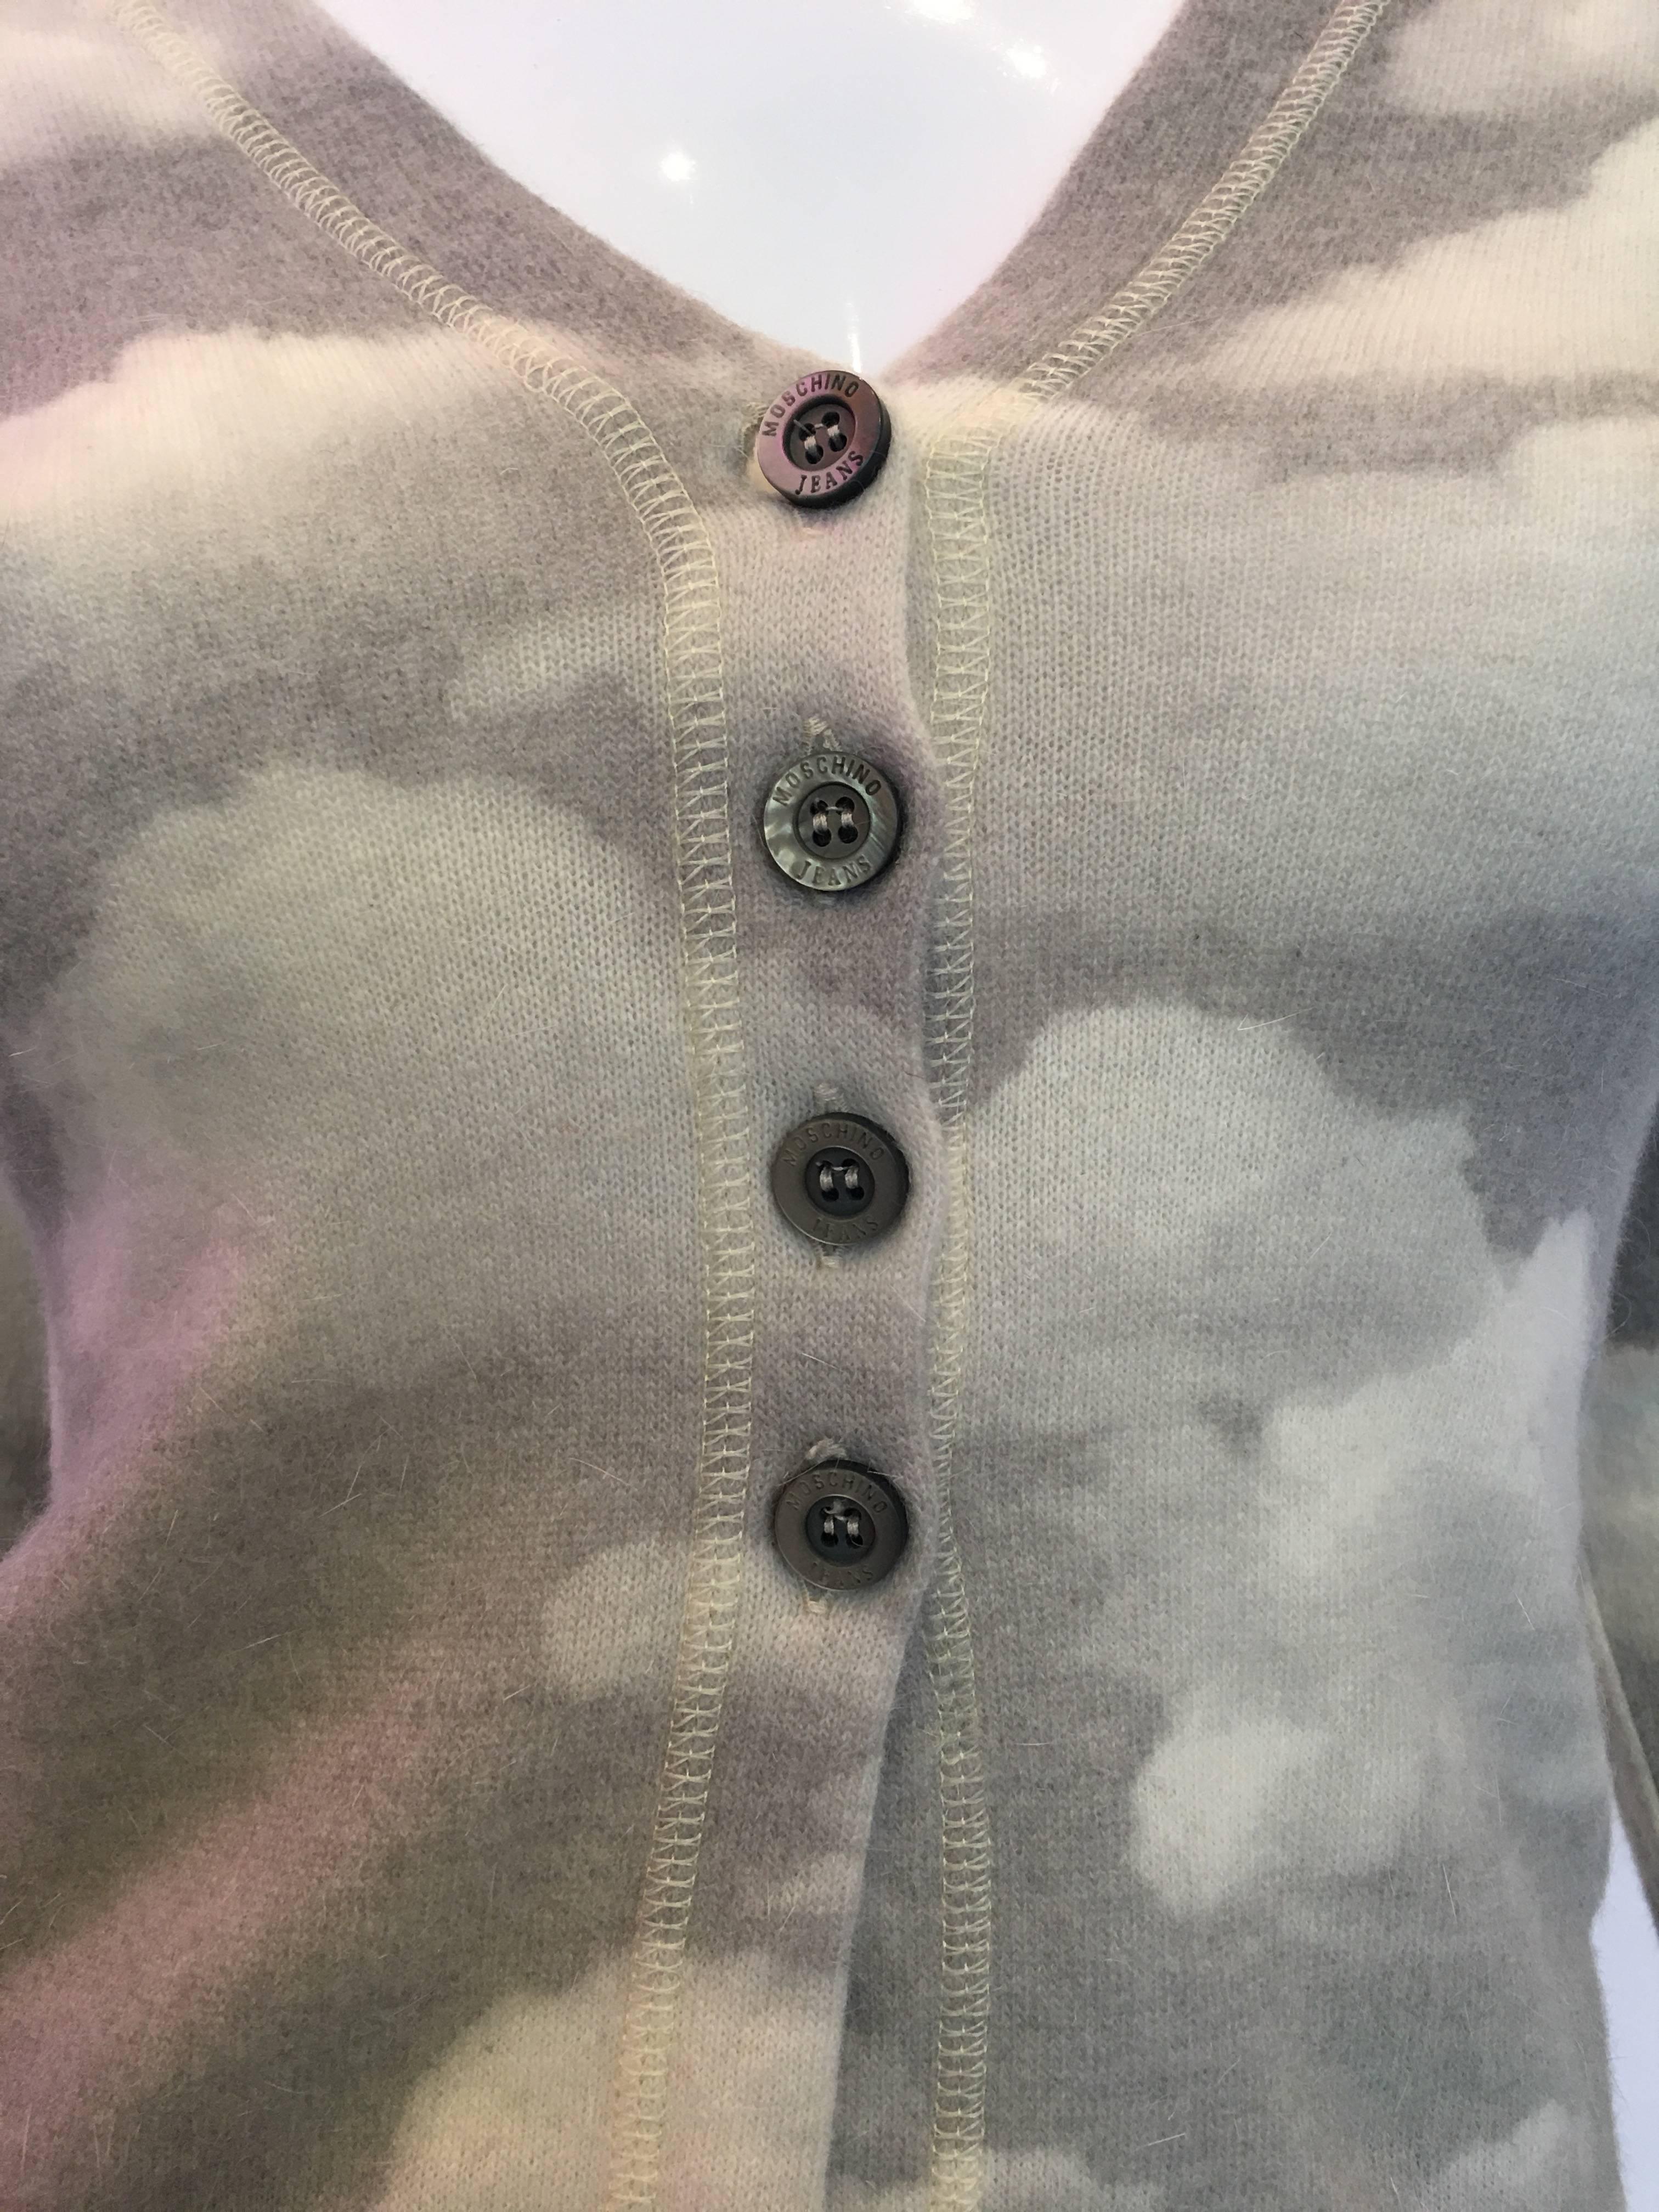 Moschino 1990's Original wool cloud sweater.
Size Label : 38(EU) ; 4 (US)

*ALL MEASUREMENTS TAKEN FLAT*

Shoulder to shoulder - 13.5 inches
Armpit to armpit - 16 inches
Bust - 32 inches
Waist - 26 inches
Sleeve (shoulder seam to wrist) 21.5